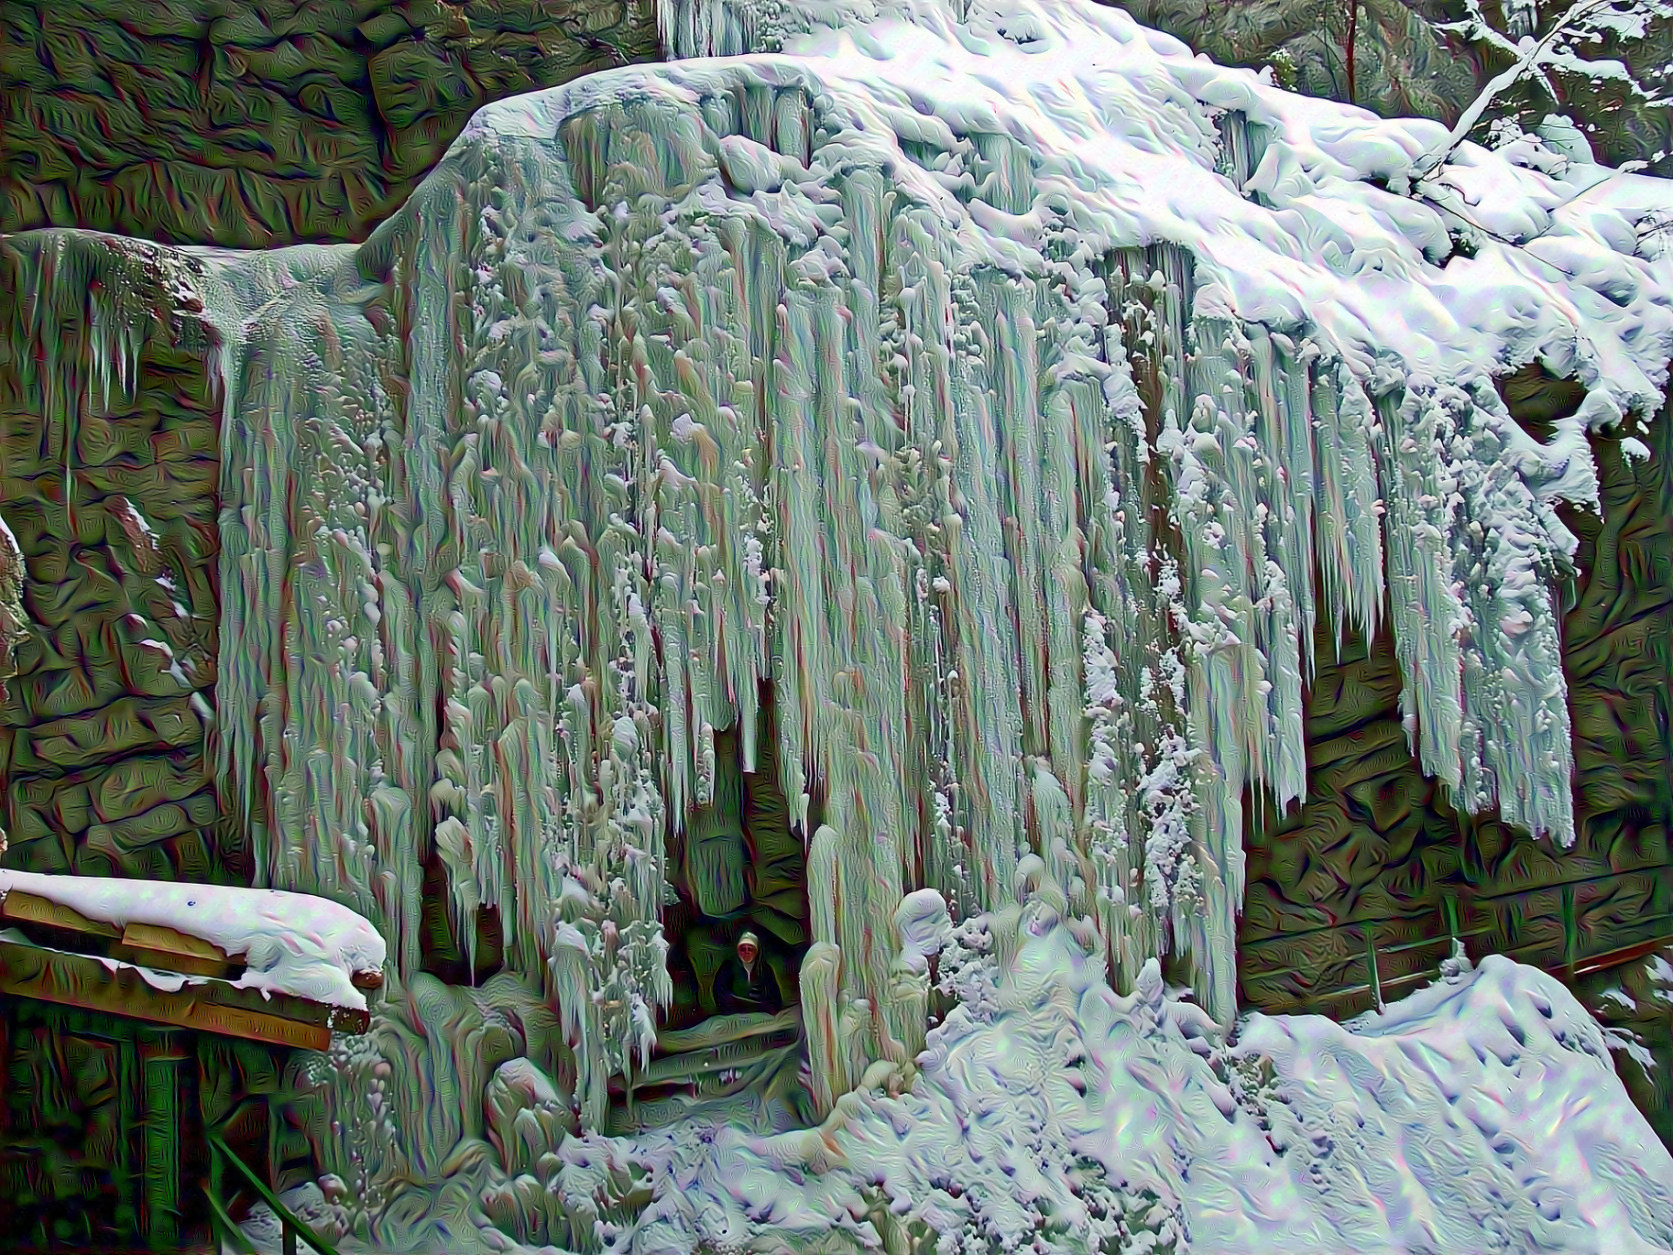 Frozen Waterfall, Oberstdorf